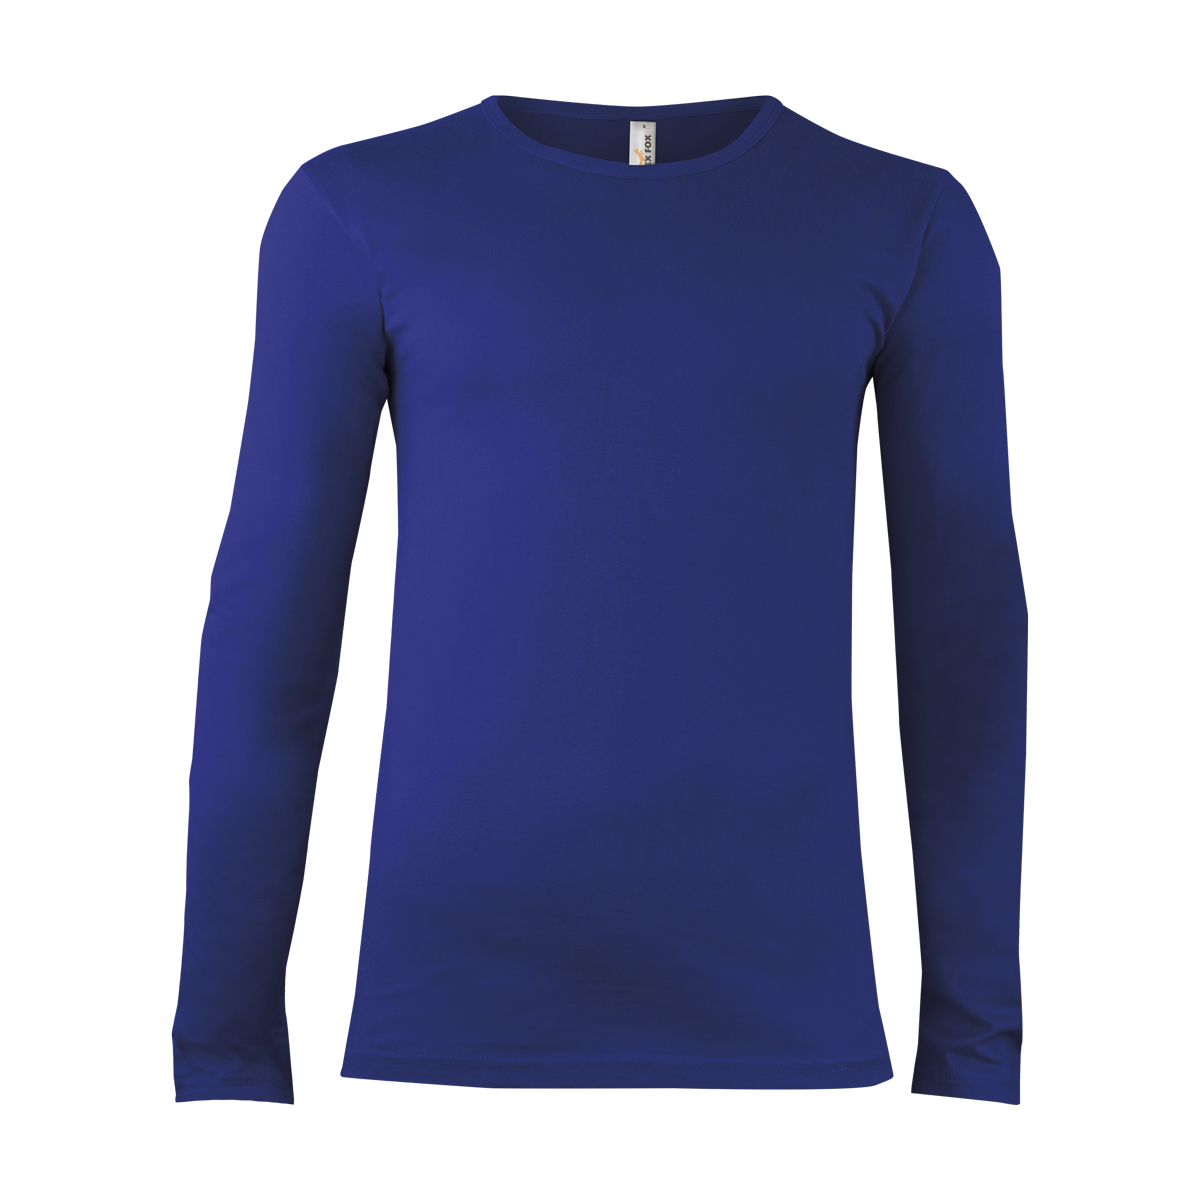 Tričko s dlouhým rukávem Alex Fox Long 150 - modré, M